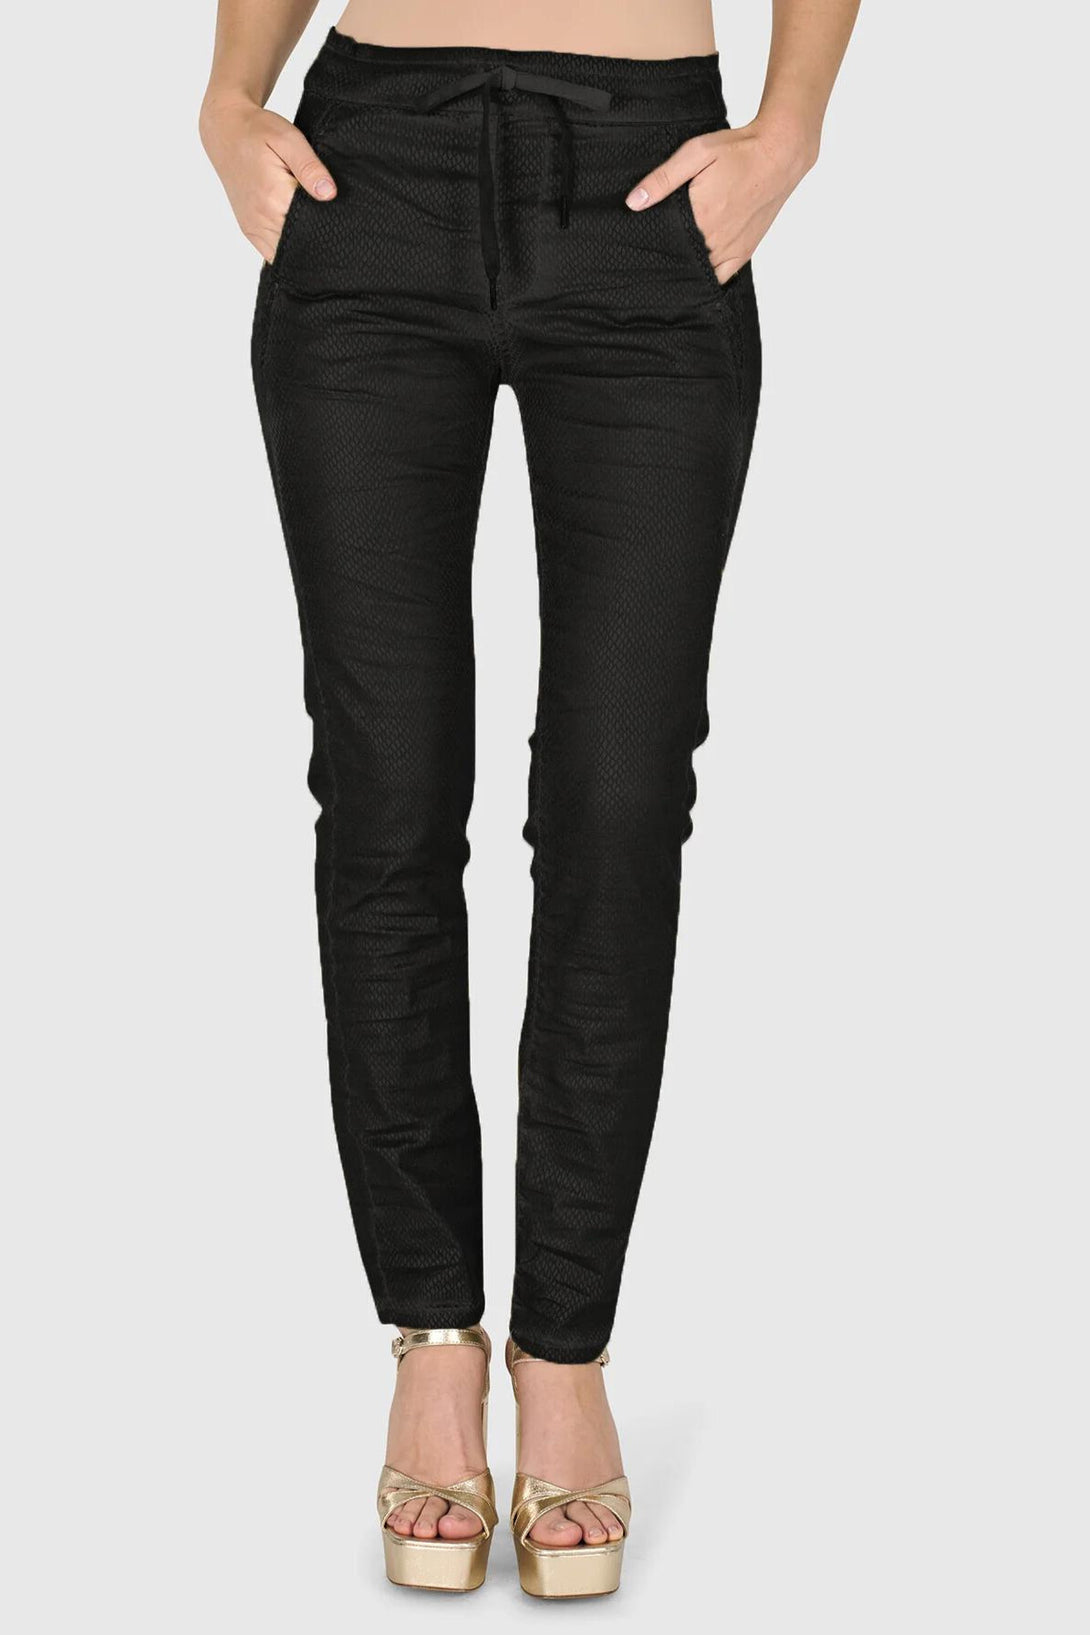 Alembika's Iconic Jeans Black